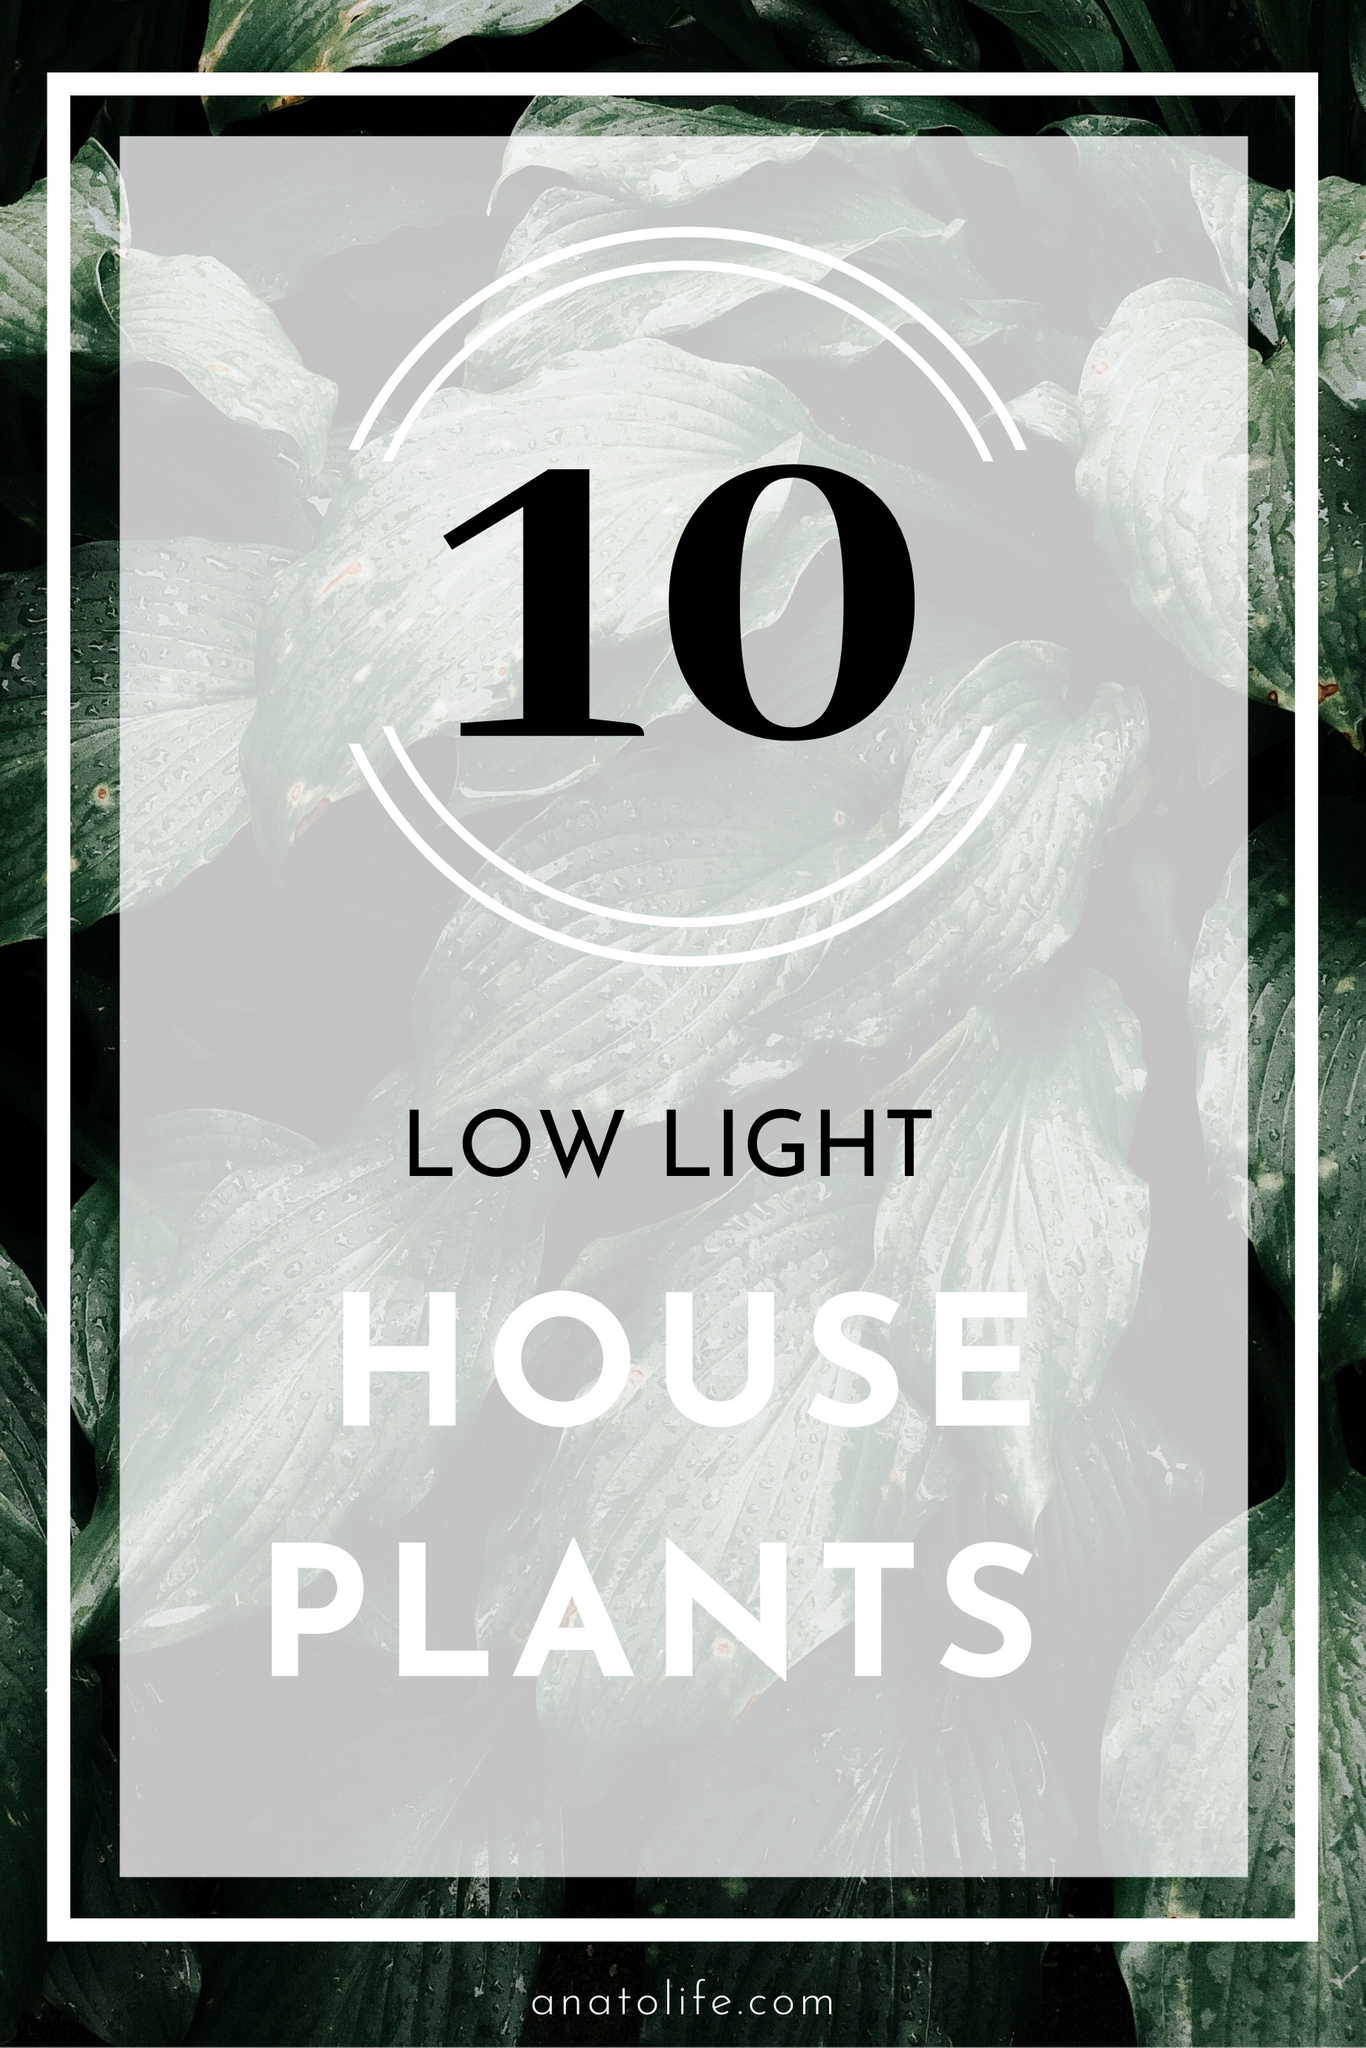 10 Low Light House Plants | ANATO LIFE regenerative_zero waste skincare from trees